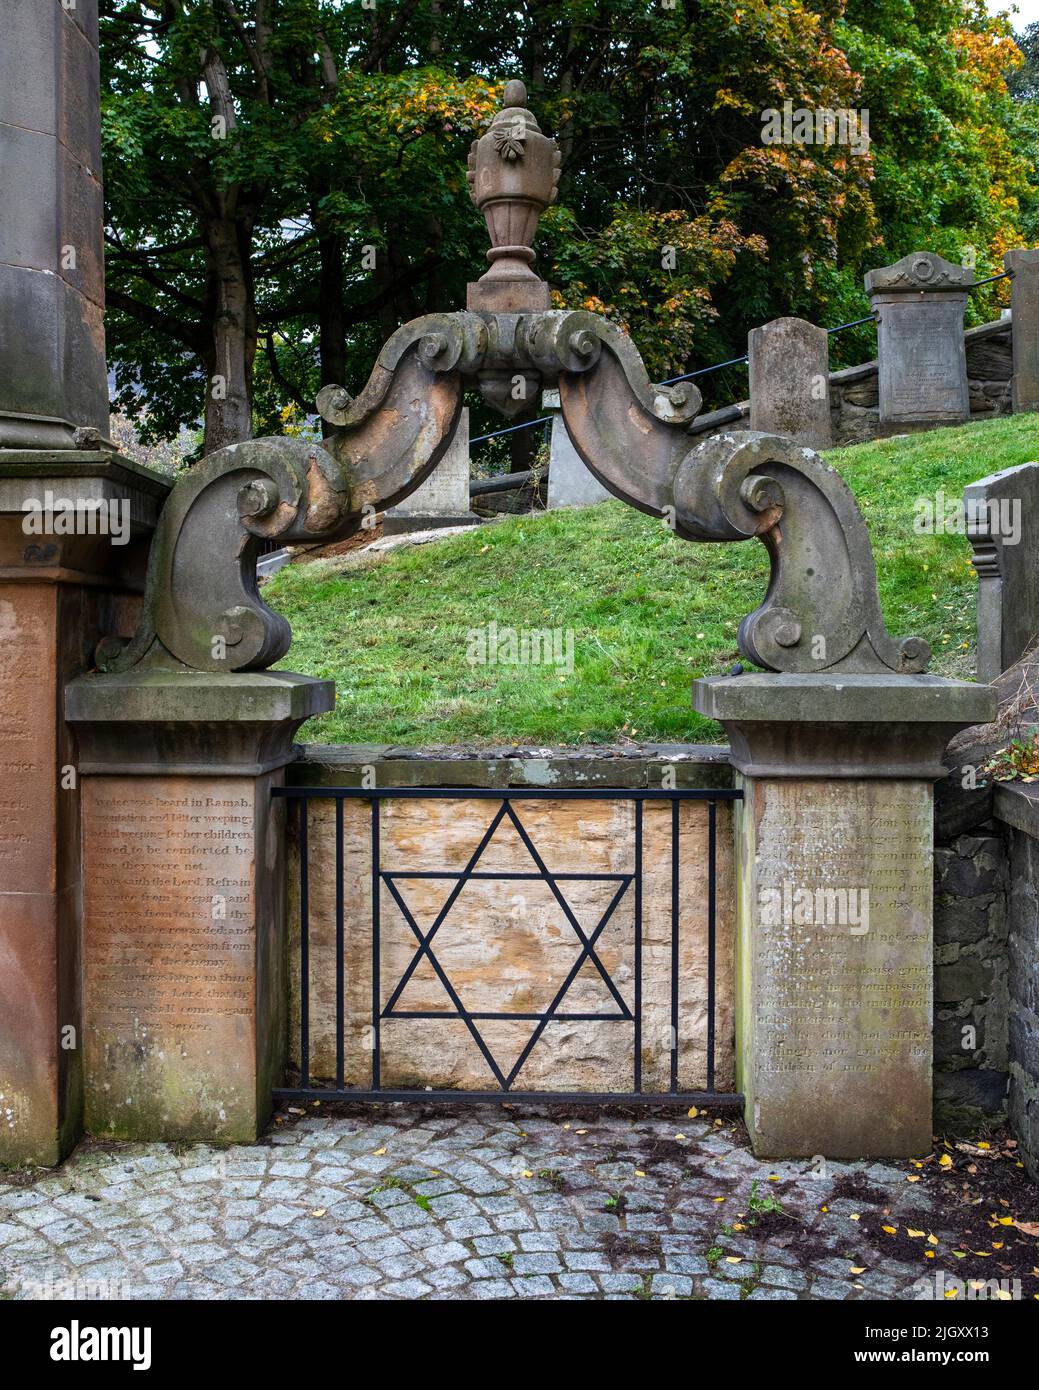 Glasgow, Scotland - October 12th 2021: The Jewish star at the Jewish burial ground section at Glasgow Necropolis in Glasgow, Scotland. Stock Photo